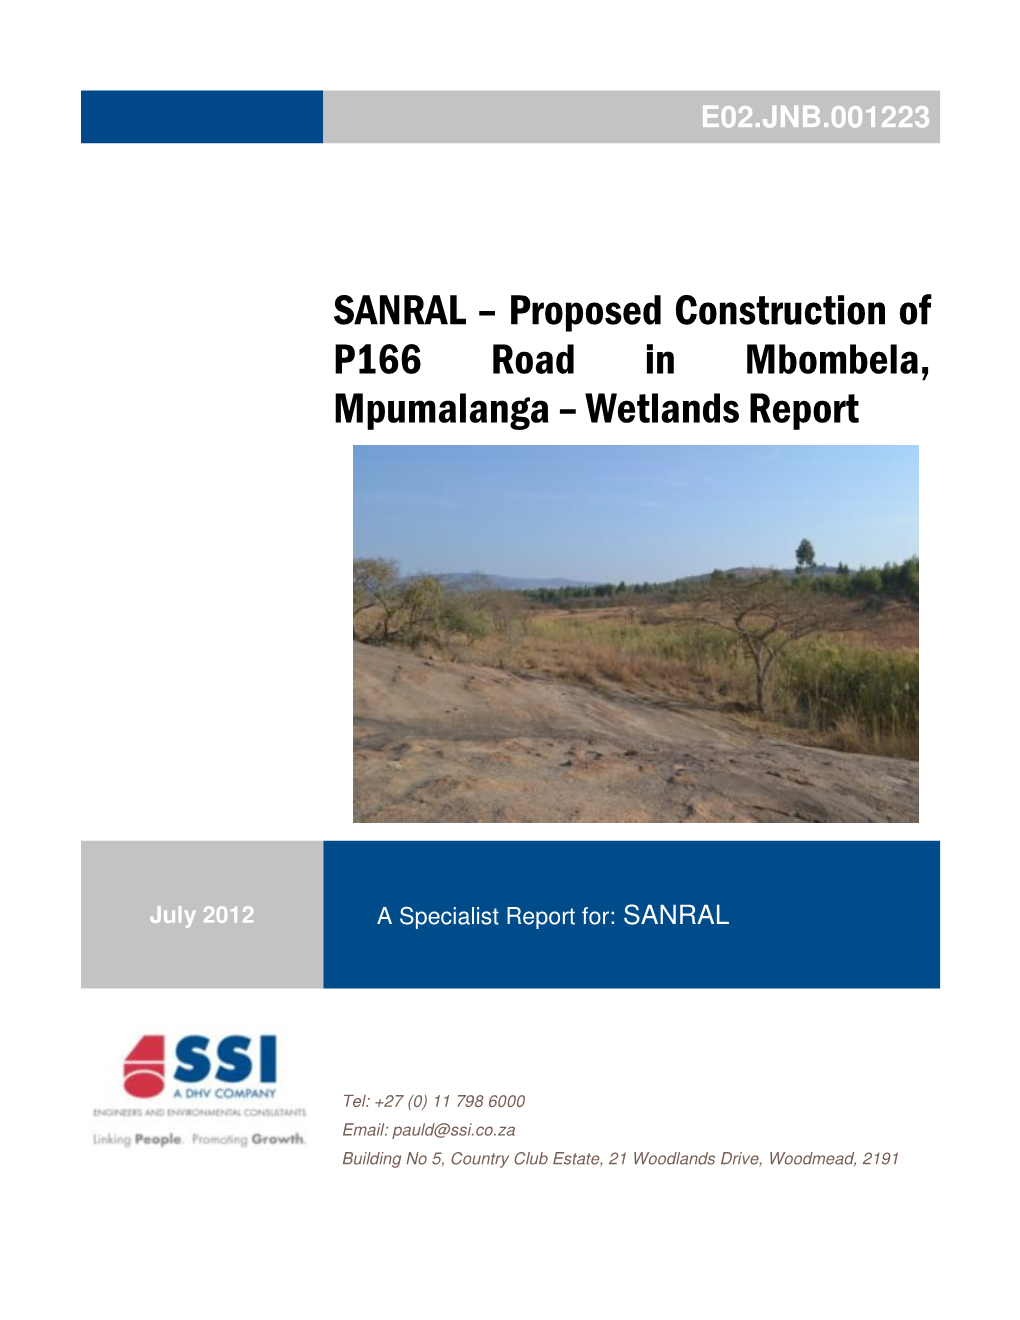 SANRAL – Proposed Construction of P166 Road in Mbombela, Mpumalanga – Wetlands Report